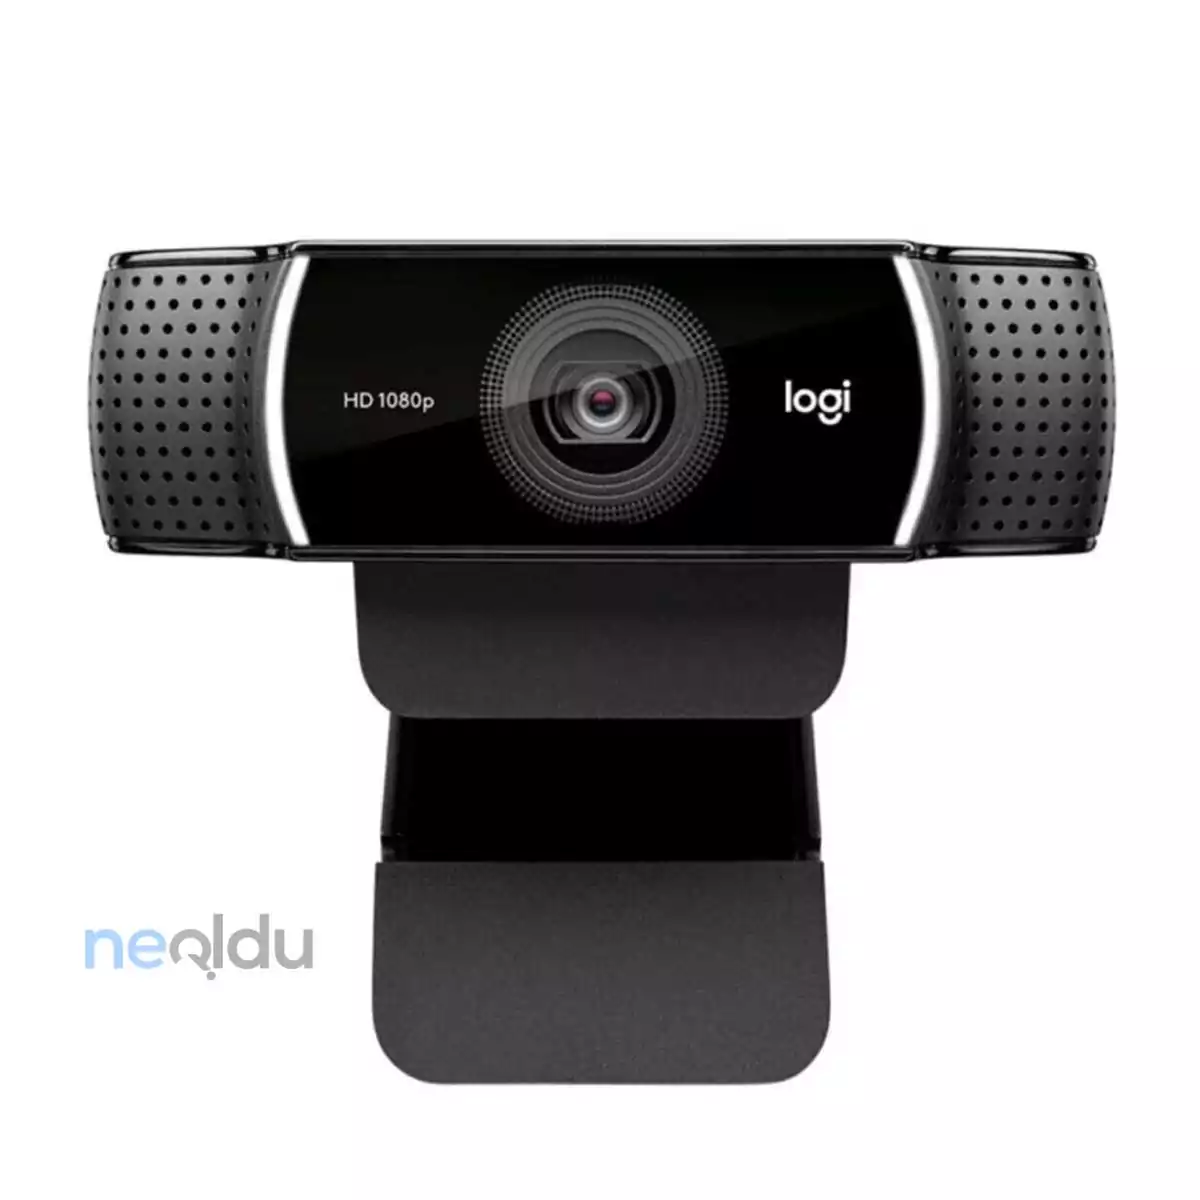 en-iyi-webcam-onerisi.webp